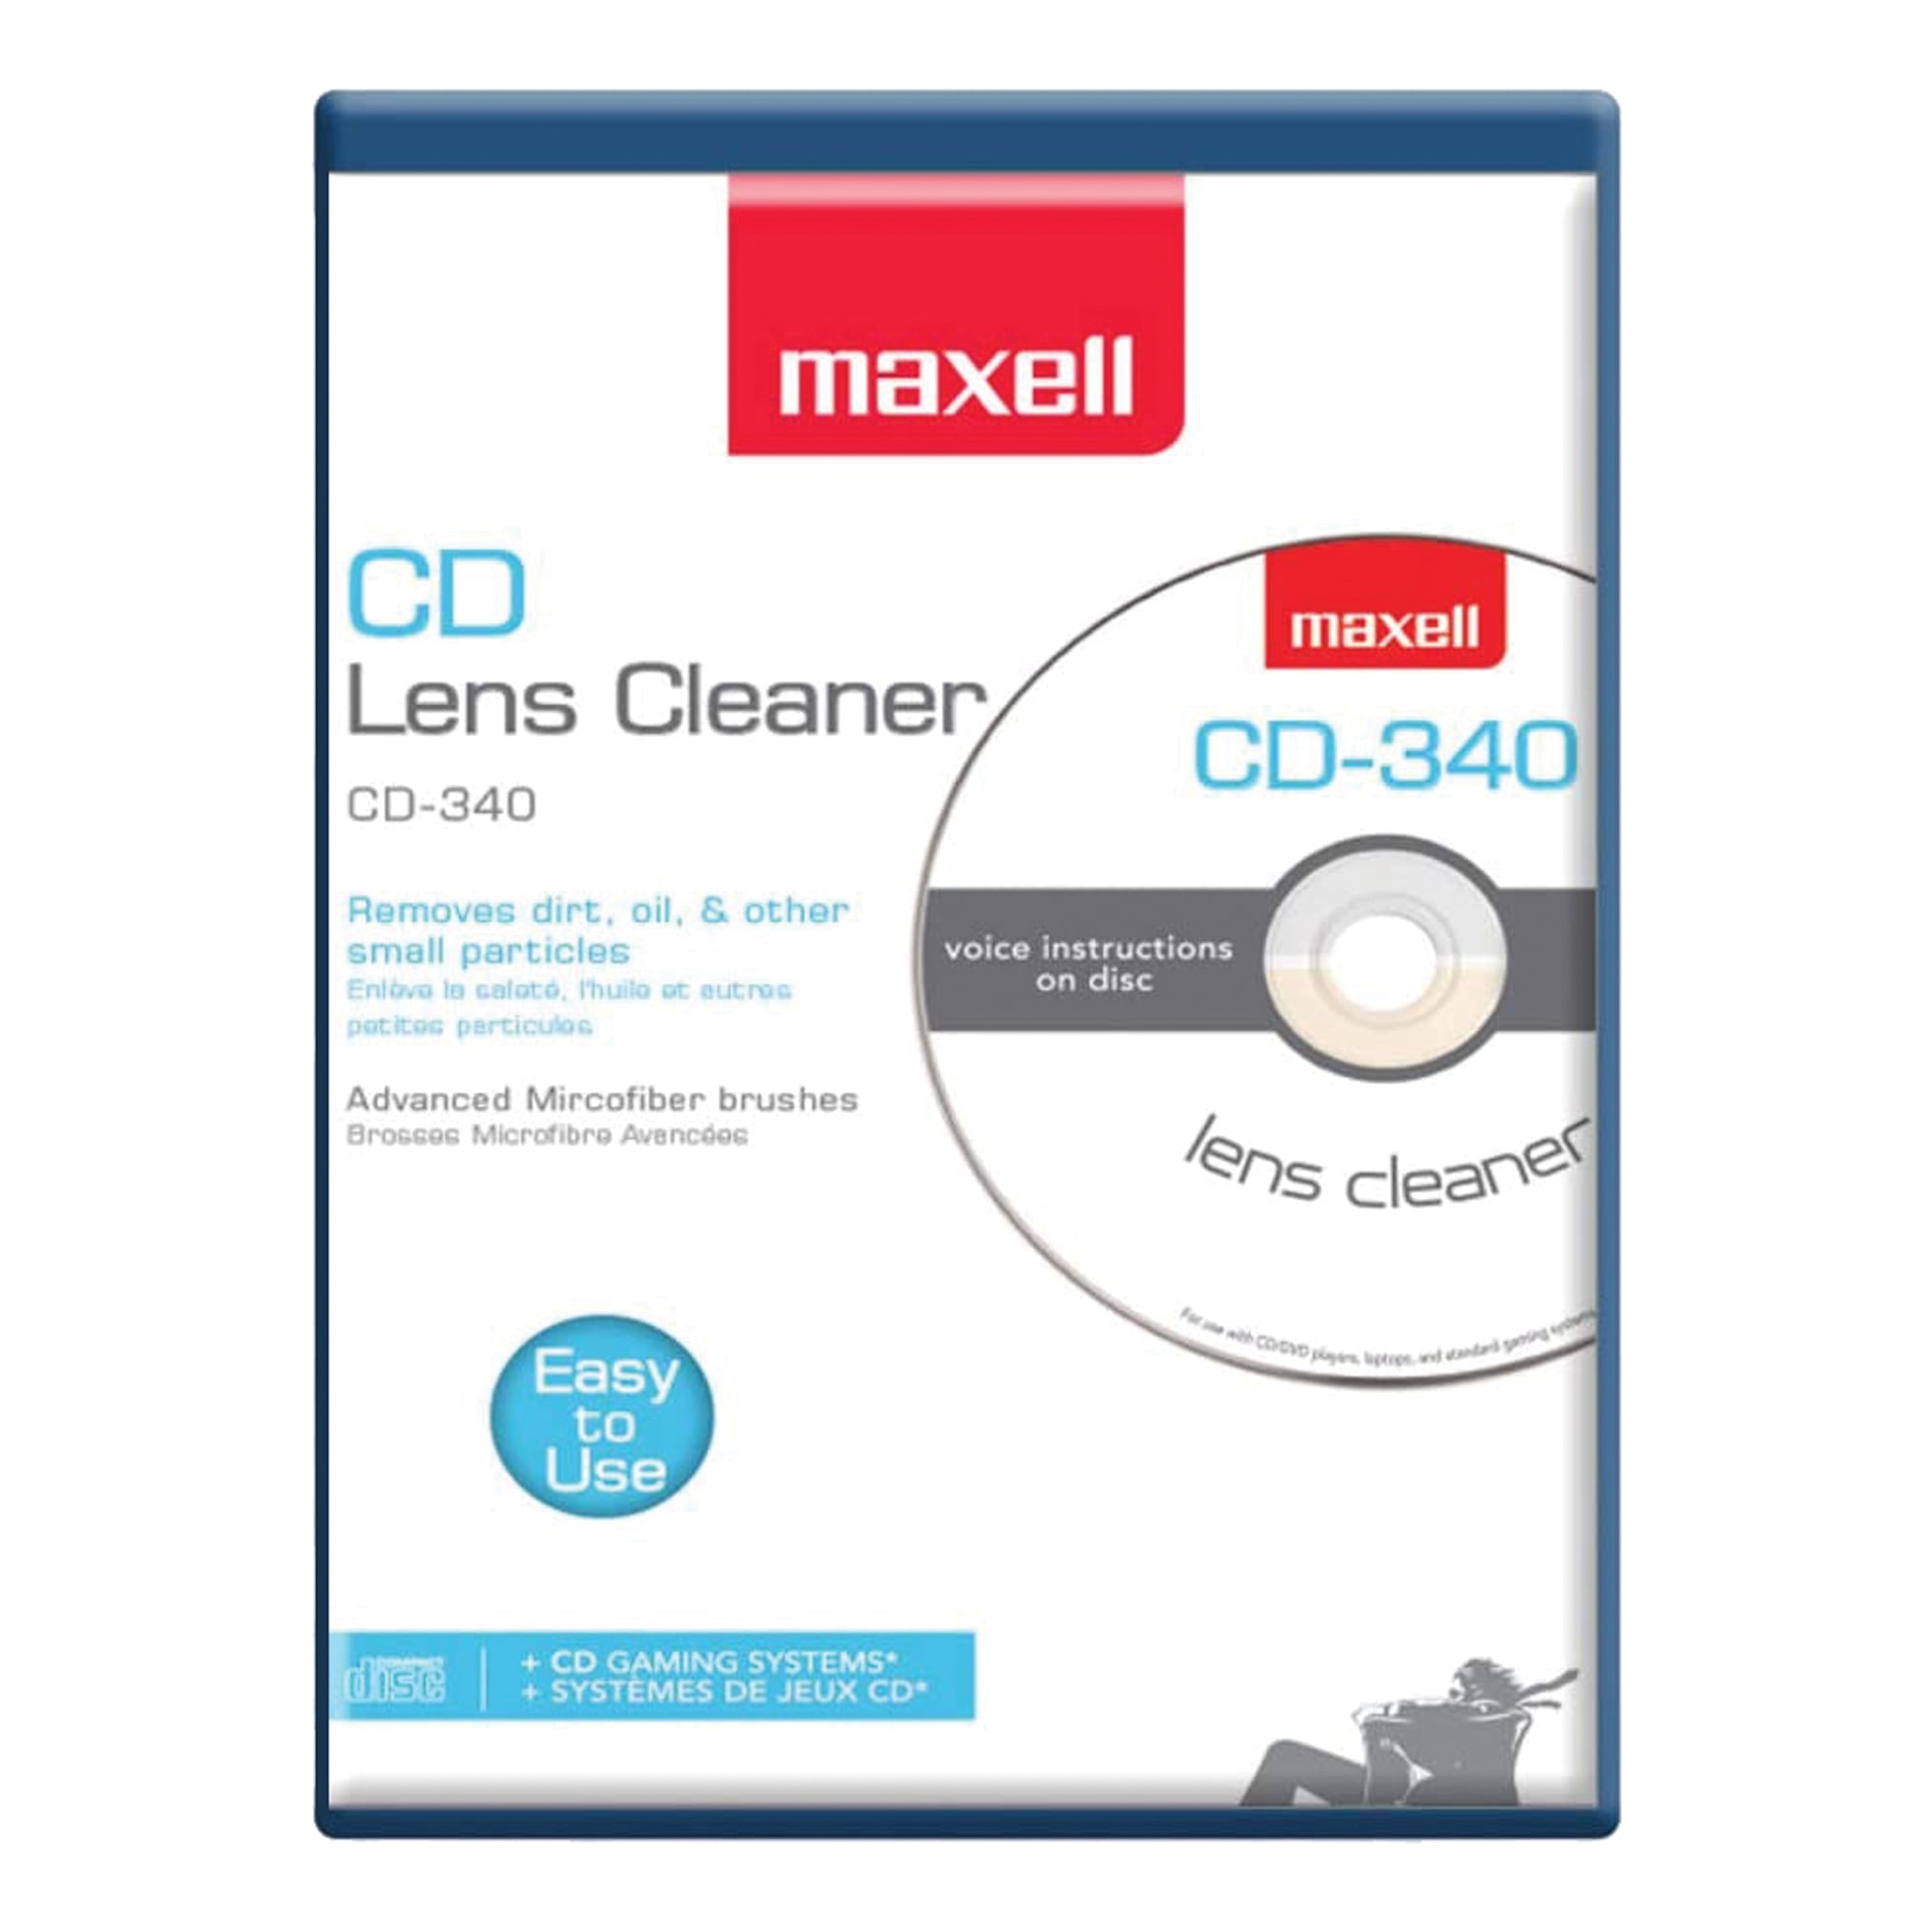 Maxell 190048 Maxl Pro CD/DVD CD-340 Laser Lens Cleaner - Walmart.com